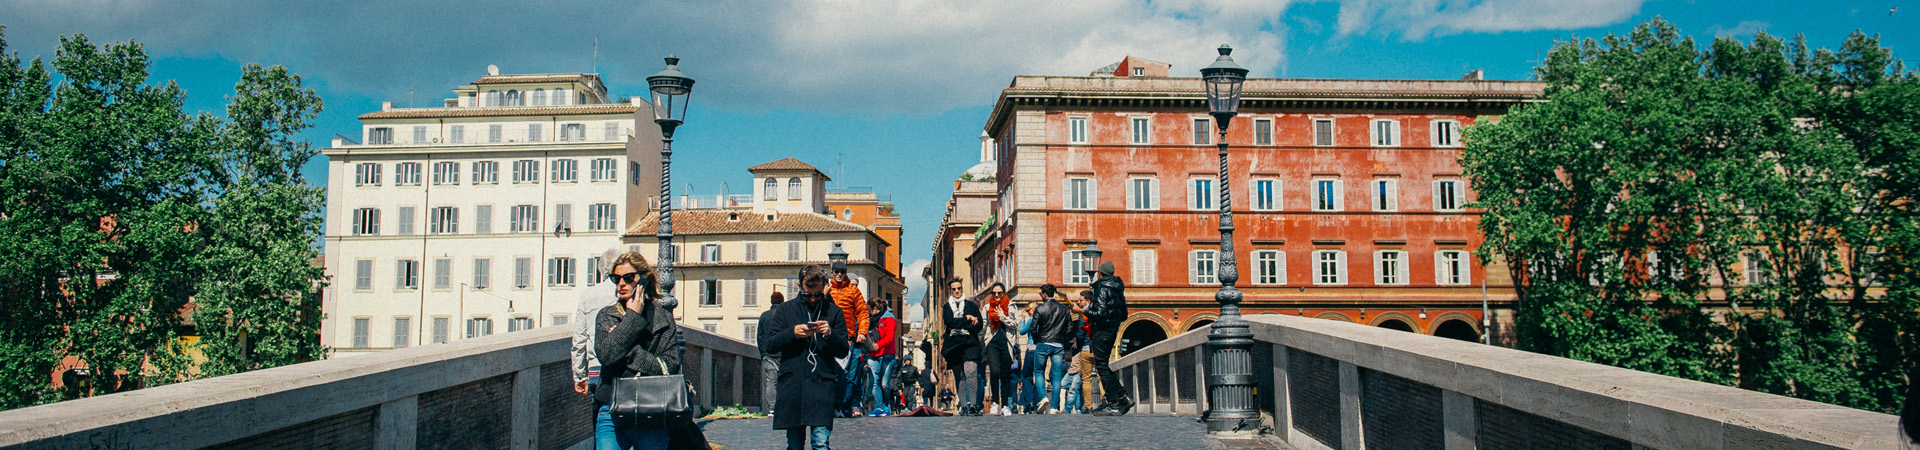 Housing Prices in Euros | John Cabot University | Rome